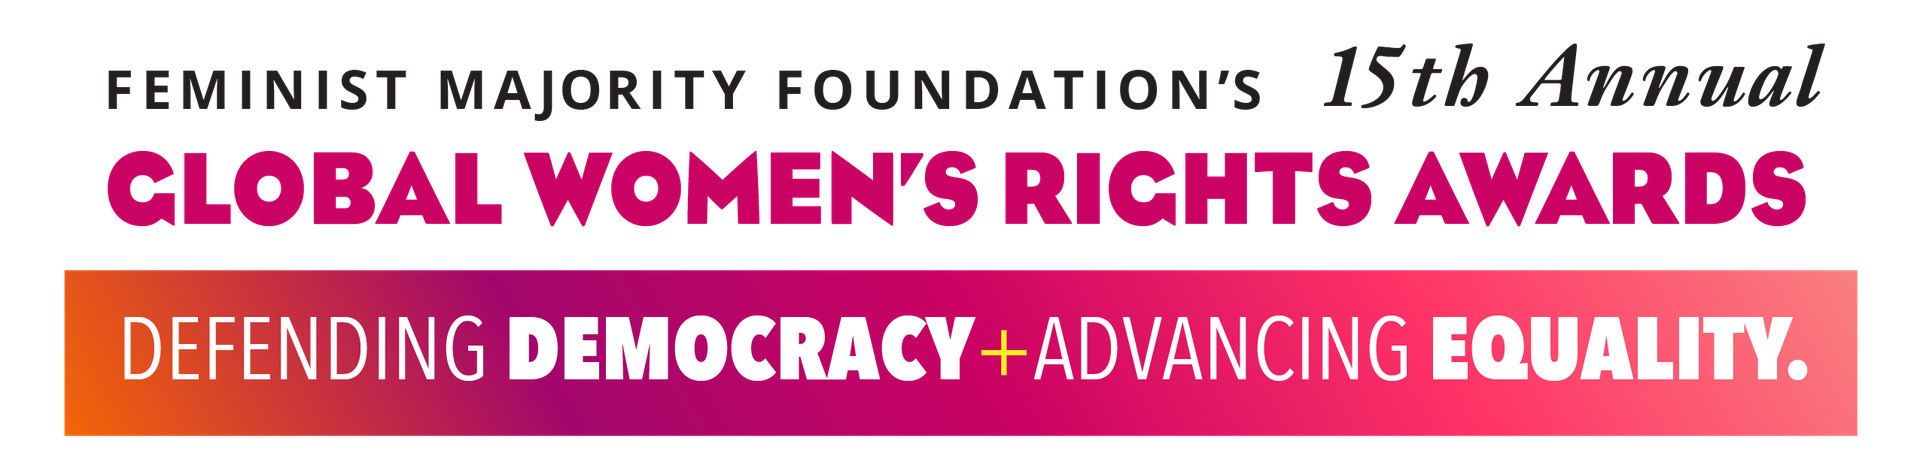 Global Women's Rights Awards logo